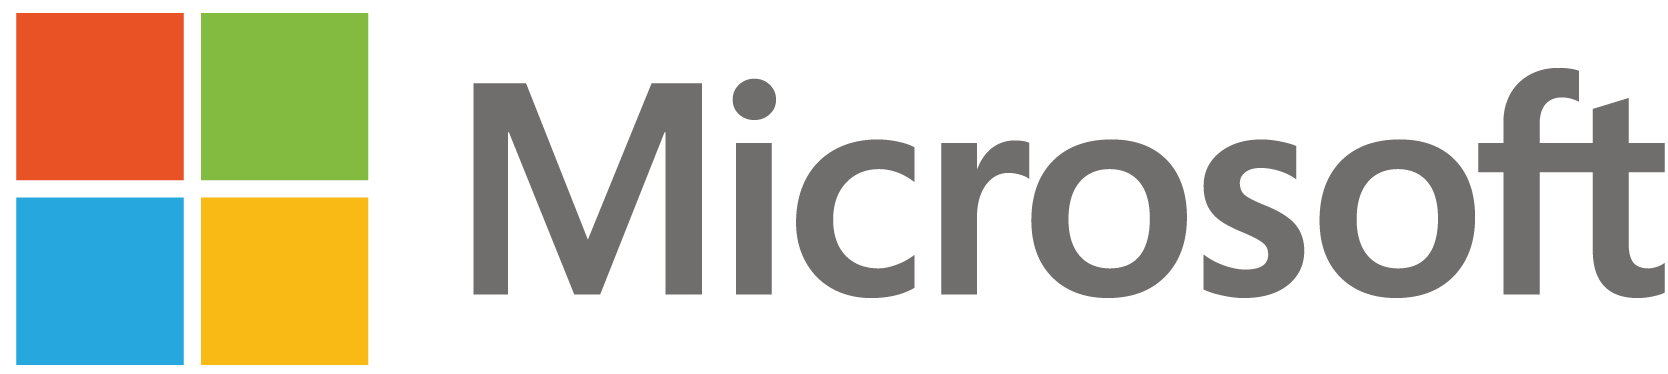 microsoft logo 800x 179.26